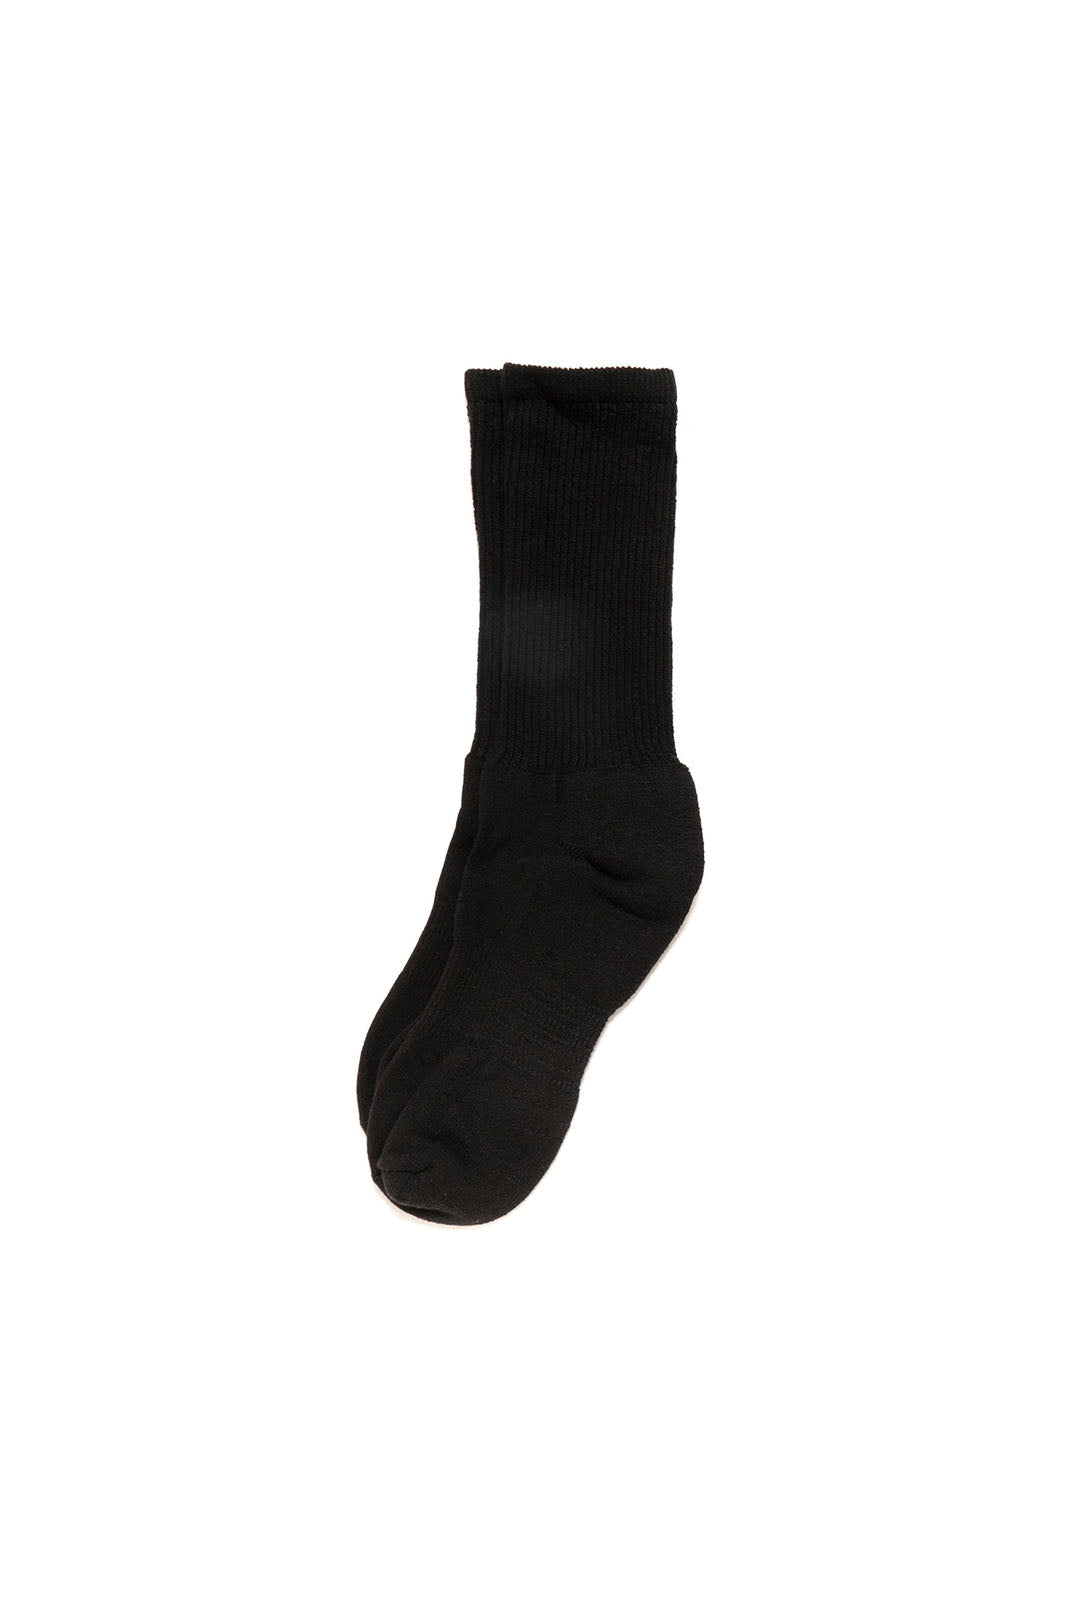 Mil-Spec Sport Sock - Black